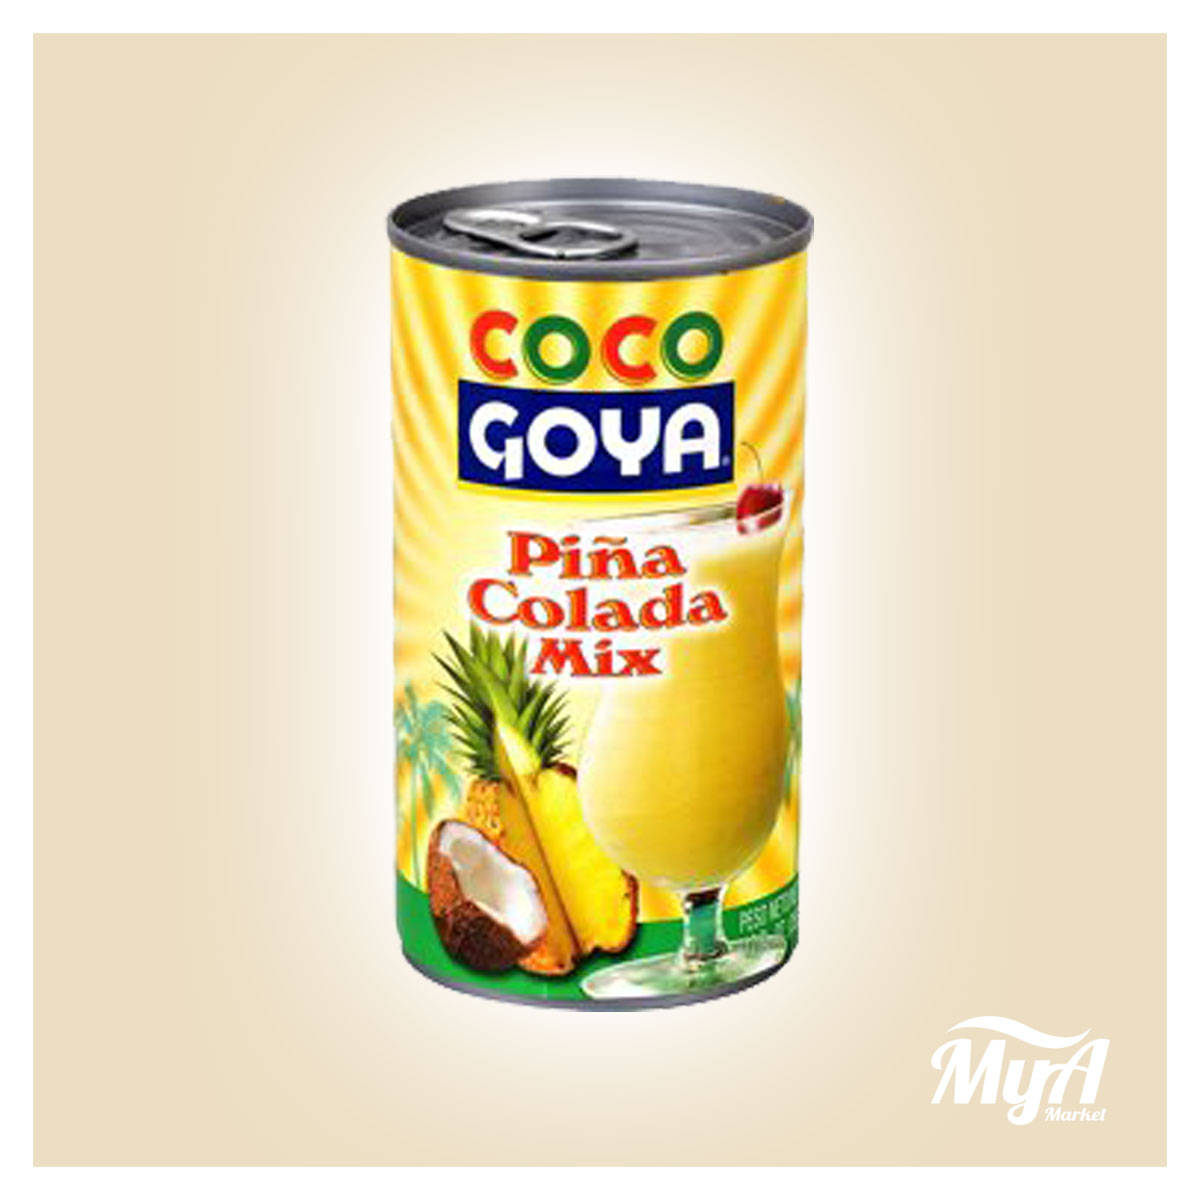 Pina Colada Mix Goya